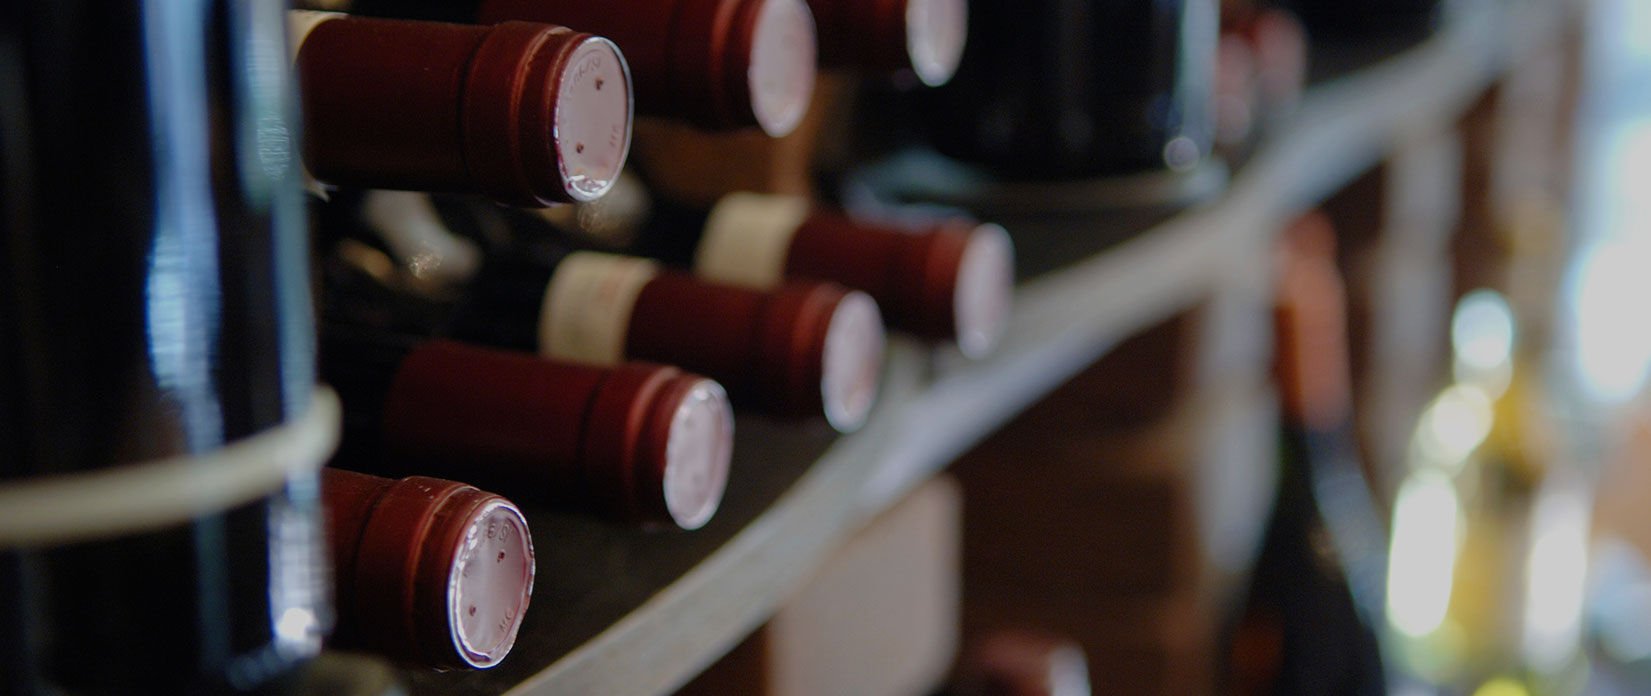 wine bottles in rack